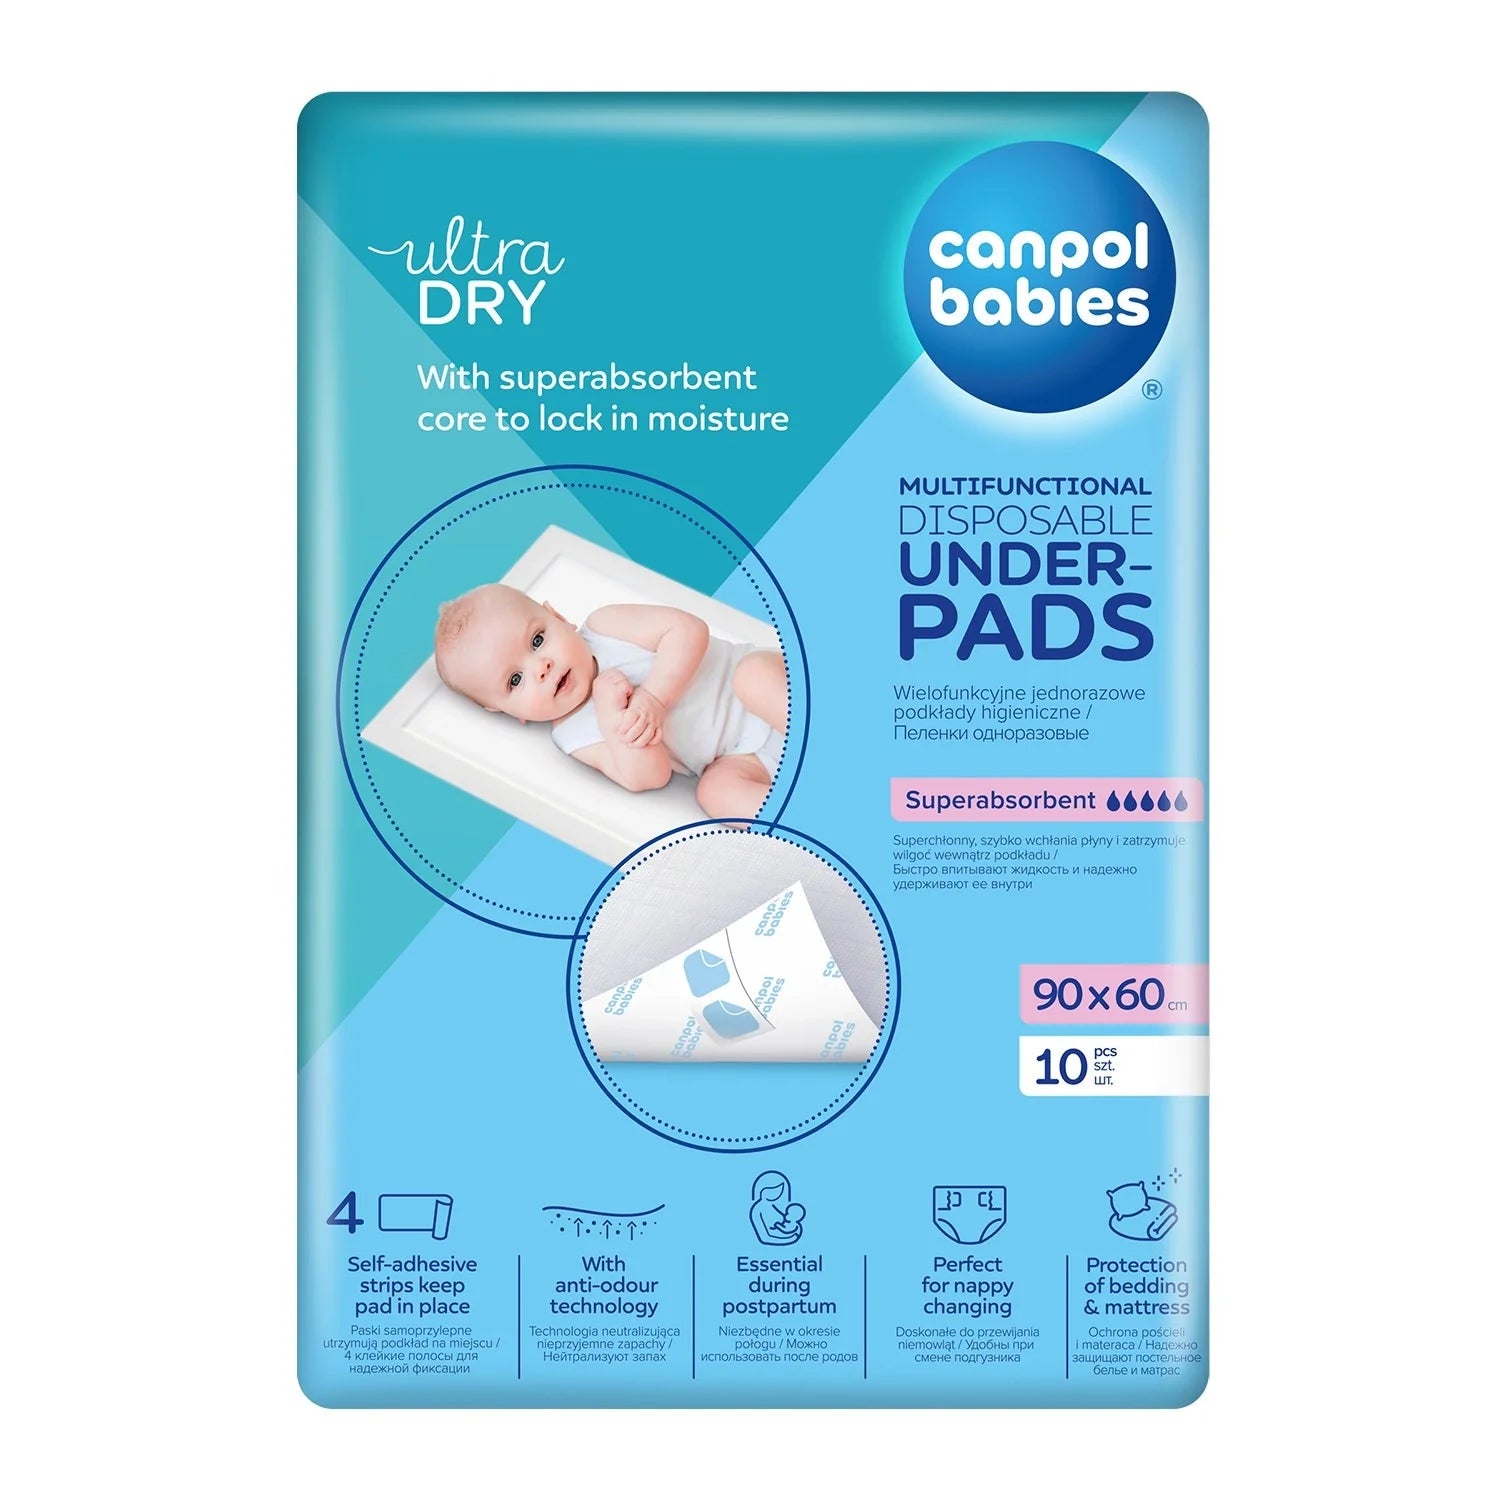 Canpol Babies: Multifunctional self-adhesive sanitary pads 90x60 cm 10 pcs.